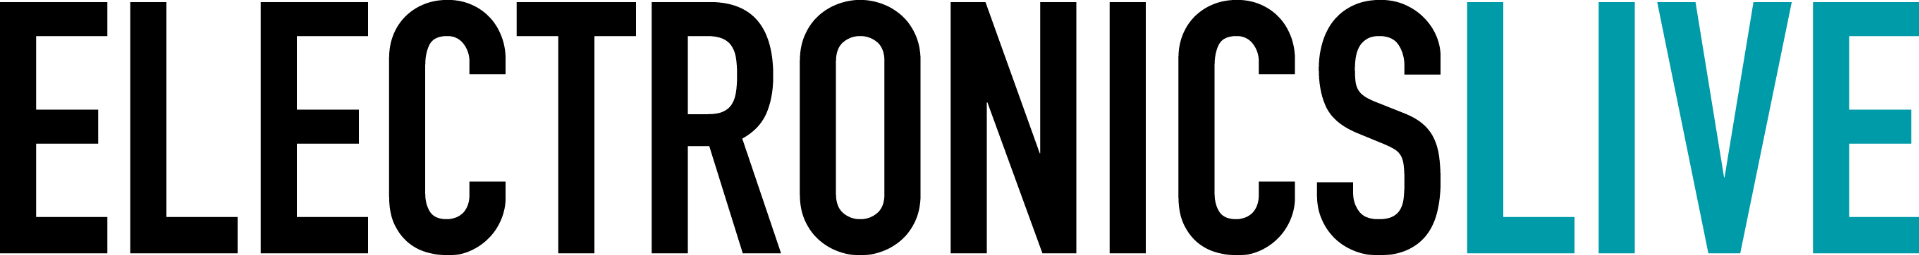 ELECTRONICS-LIVE-Logo-OL